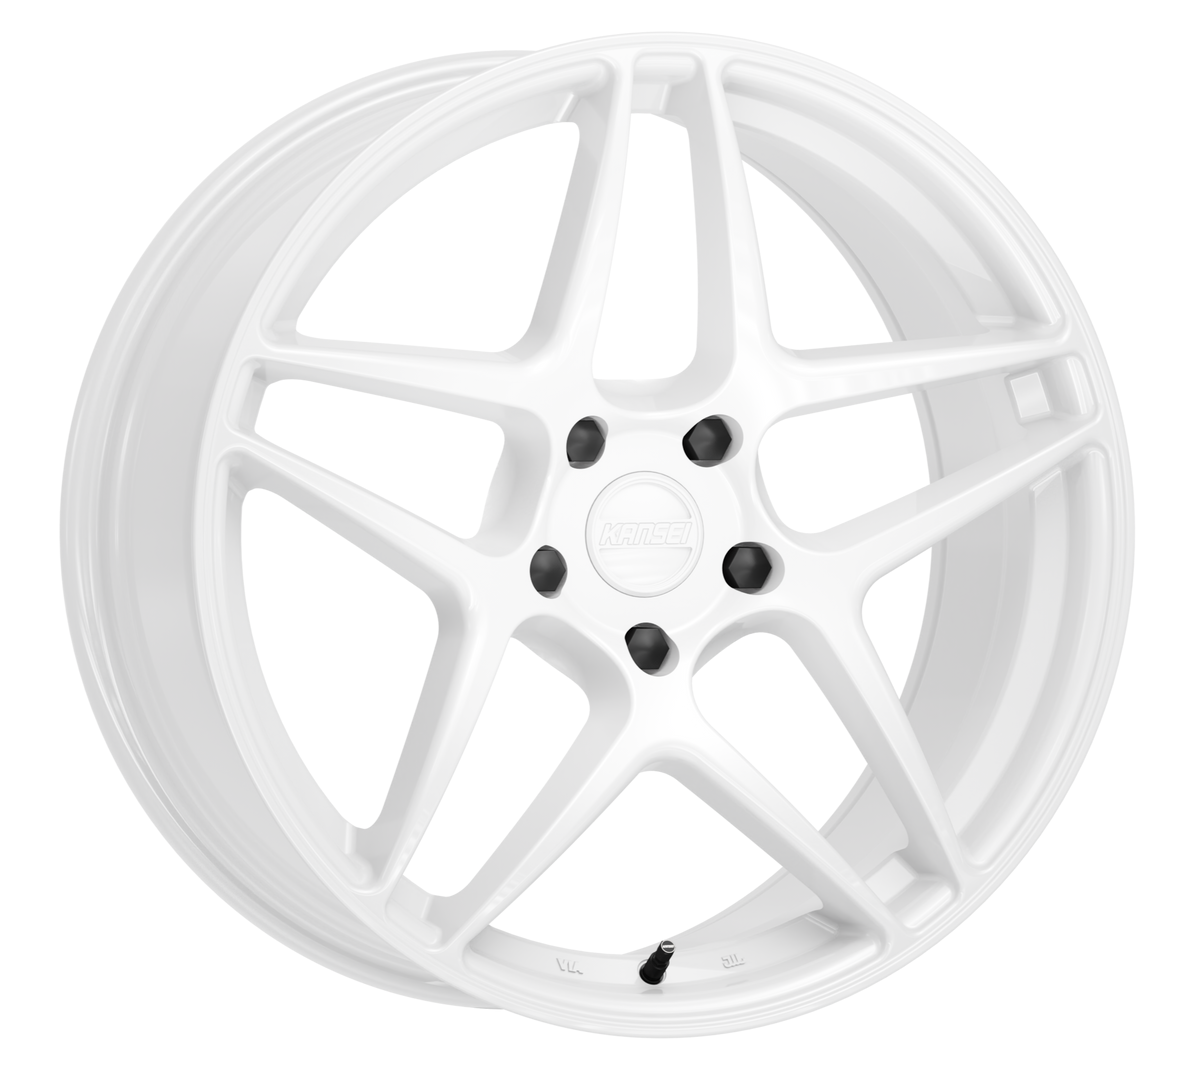 K15W ASTRO Wheel, Size: 19" x 10.50", Bolt Pattern: 5 x 112 mm, Backspace: 7.13" [Finish: Gloss White]